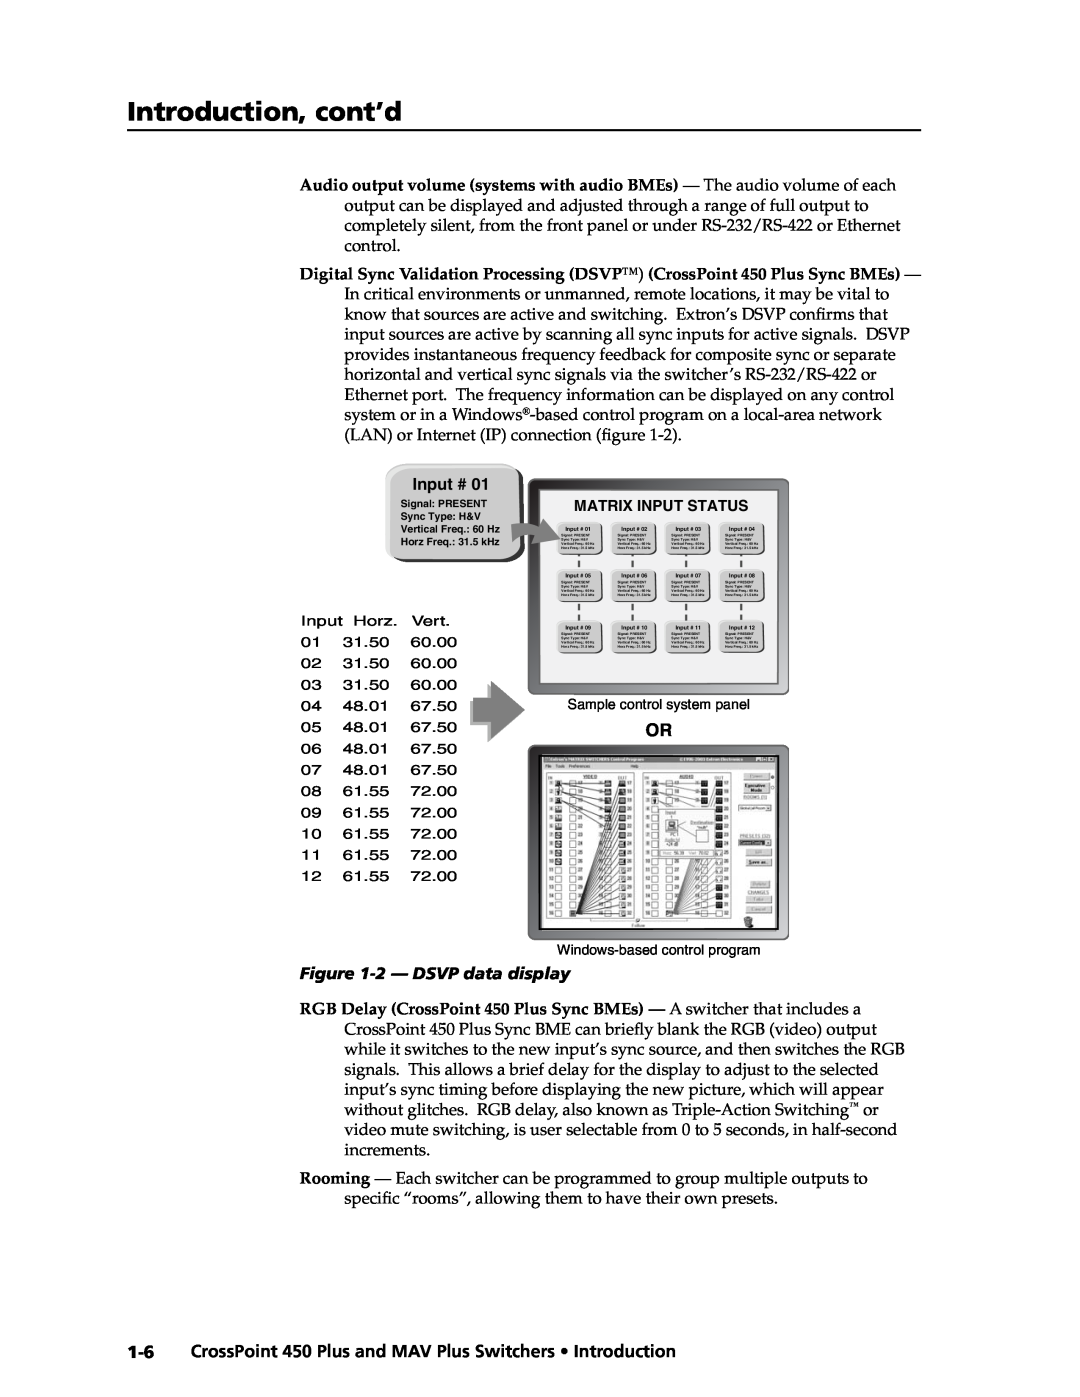 Extron electronic MAV Plus, 450 Plus manual Introduction, cont’d, Input #, 2 - DSVP data display 